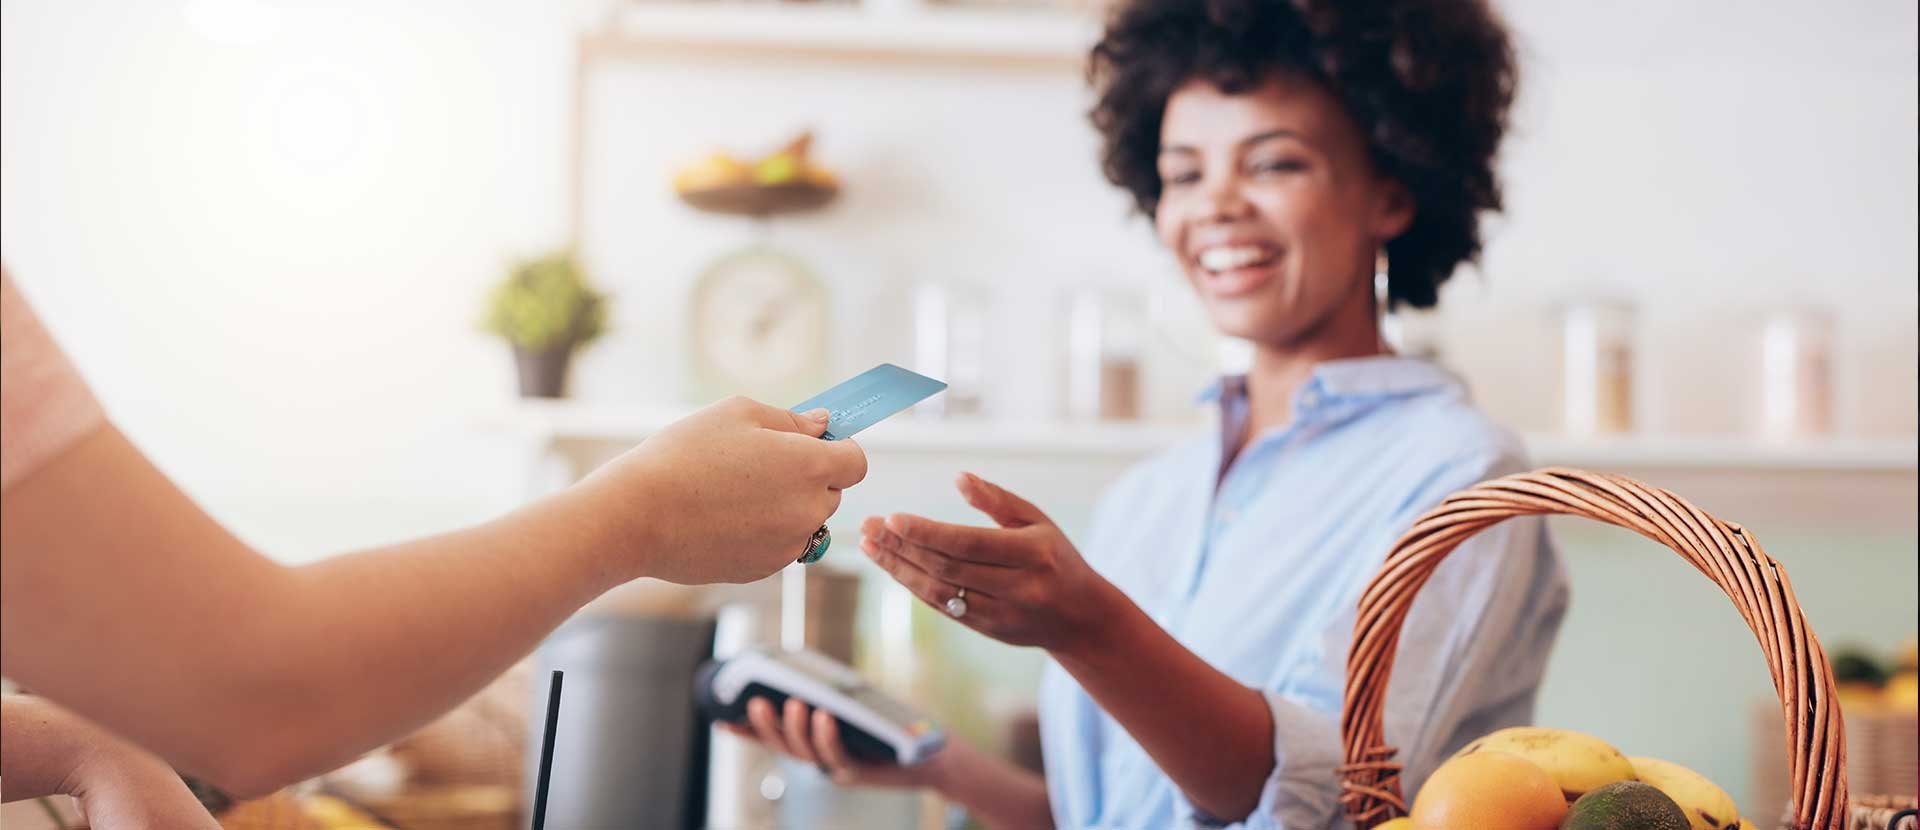 Woman using Debit Card at store